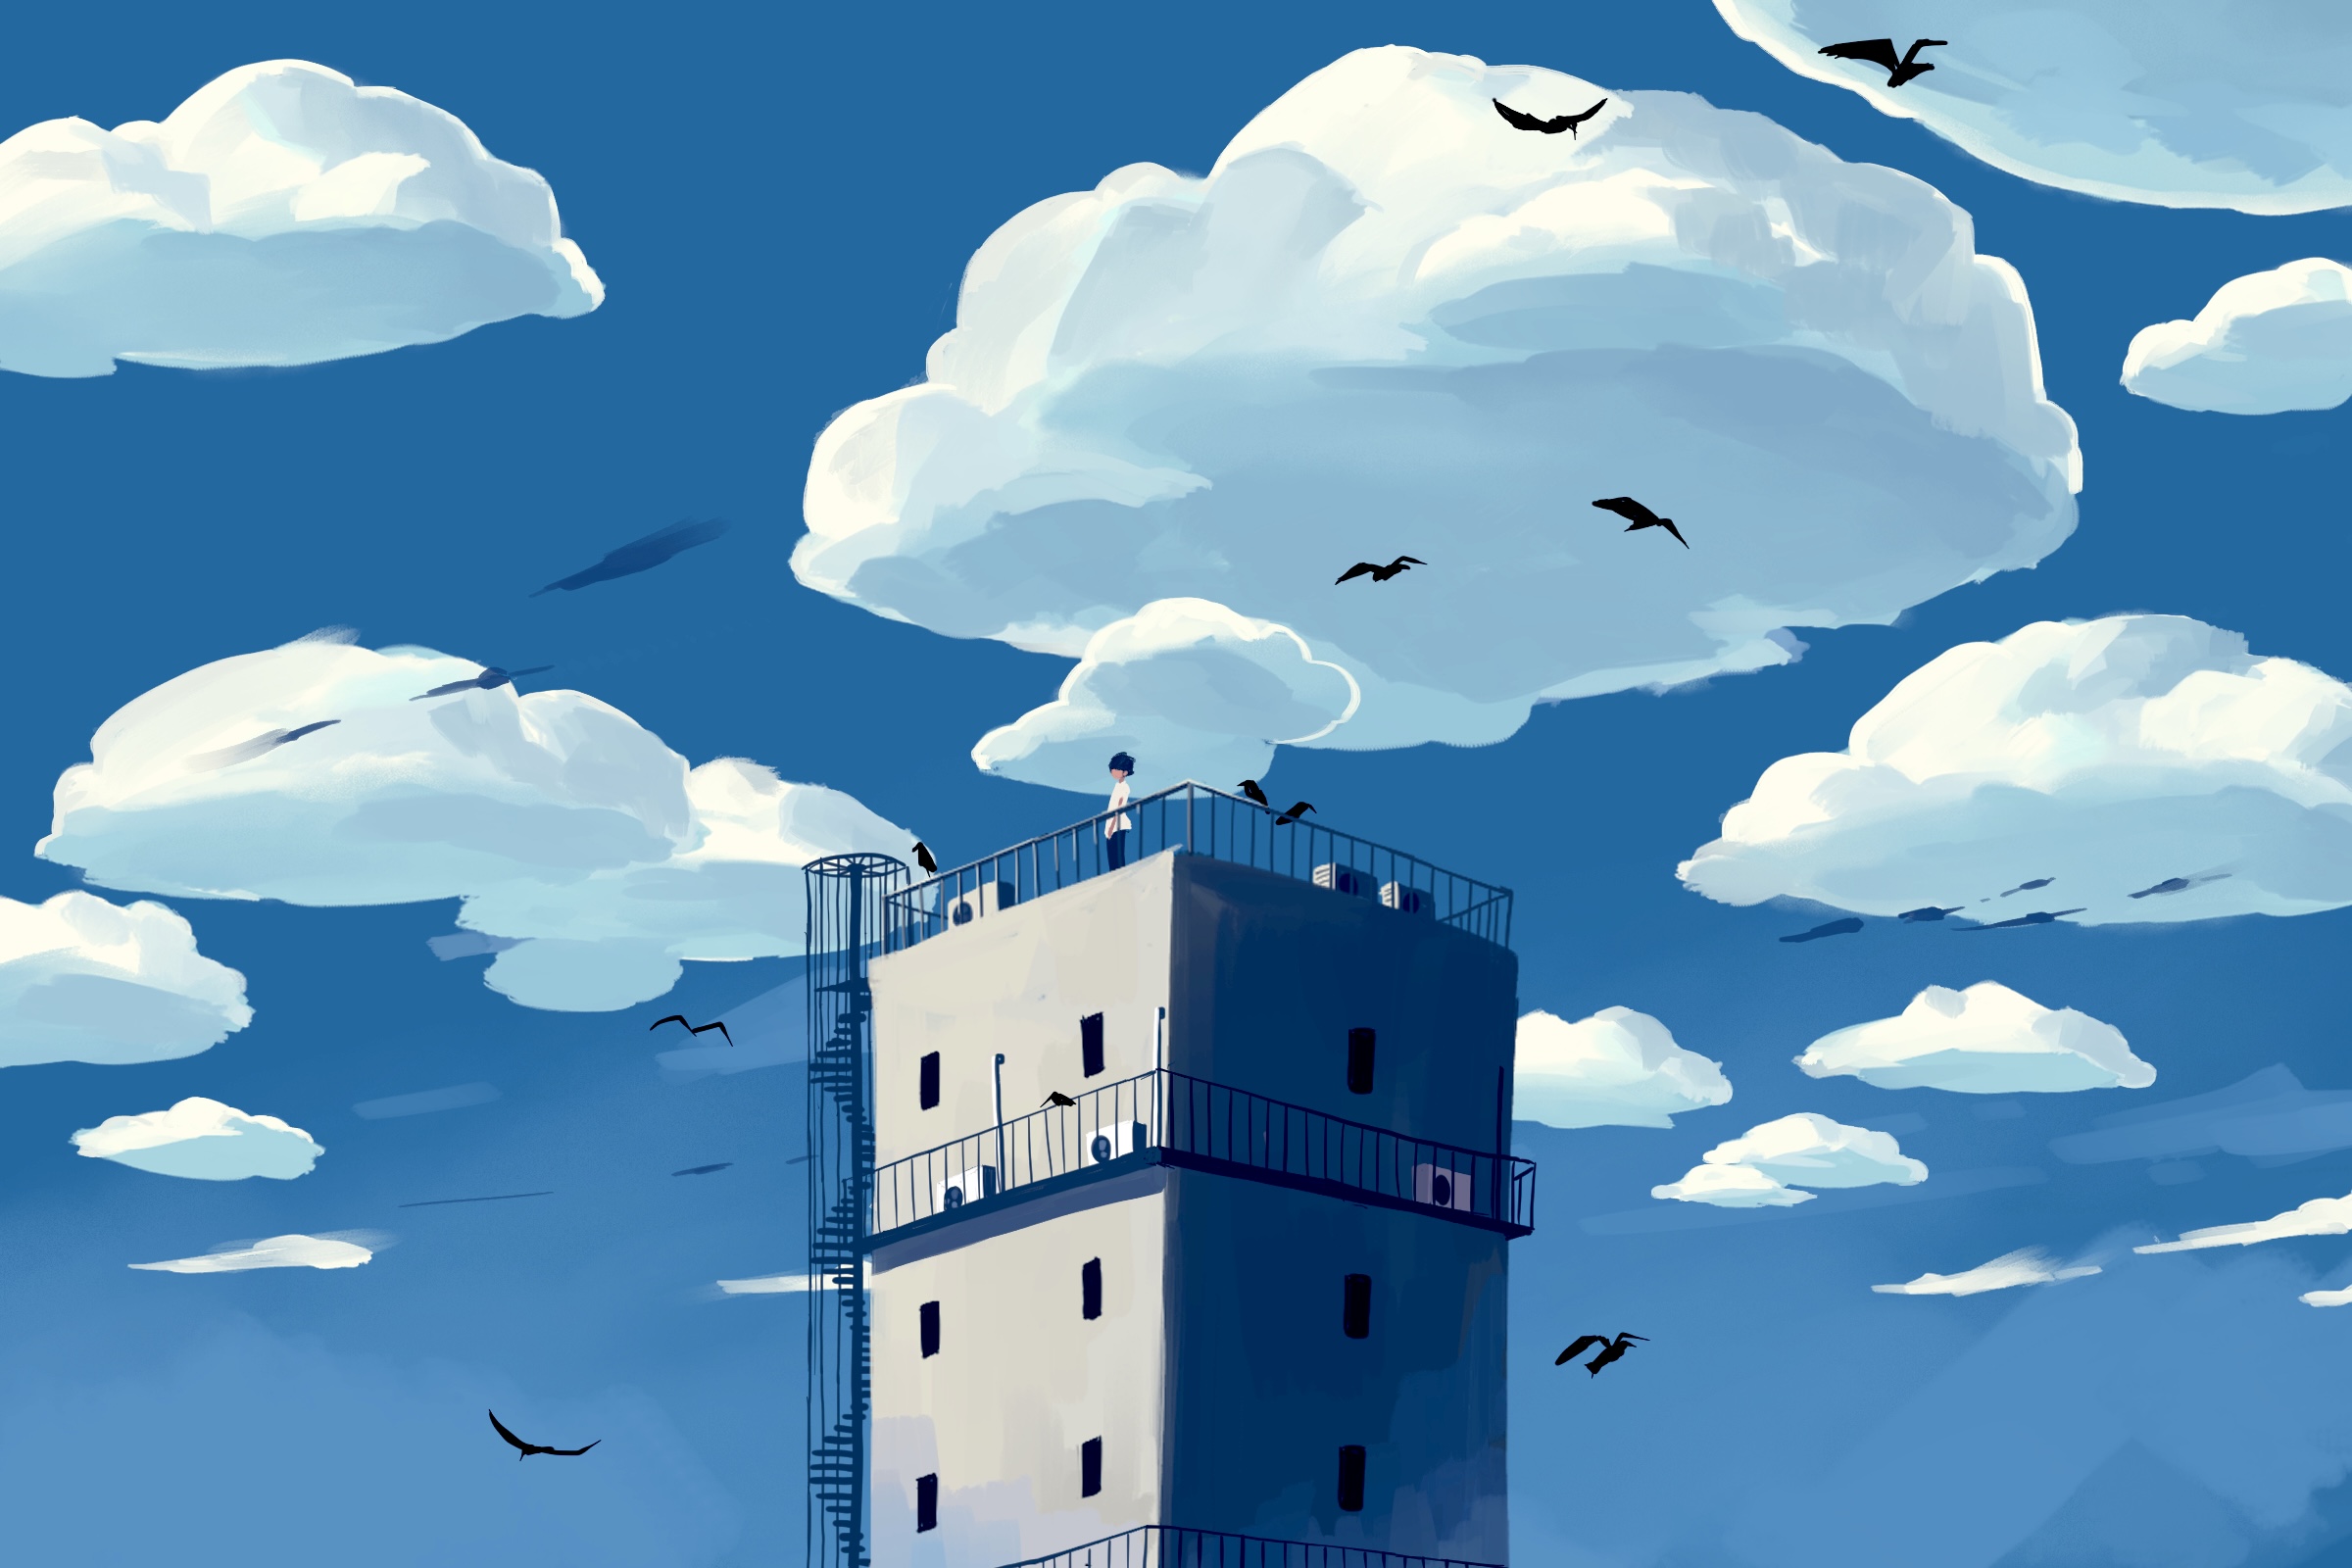 General 2400x1600 Taizo digital art artwork illustration clouds sky birds animals building blue standing wind